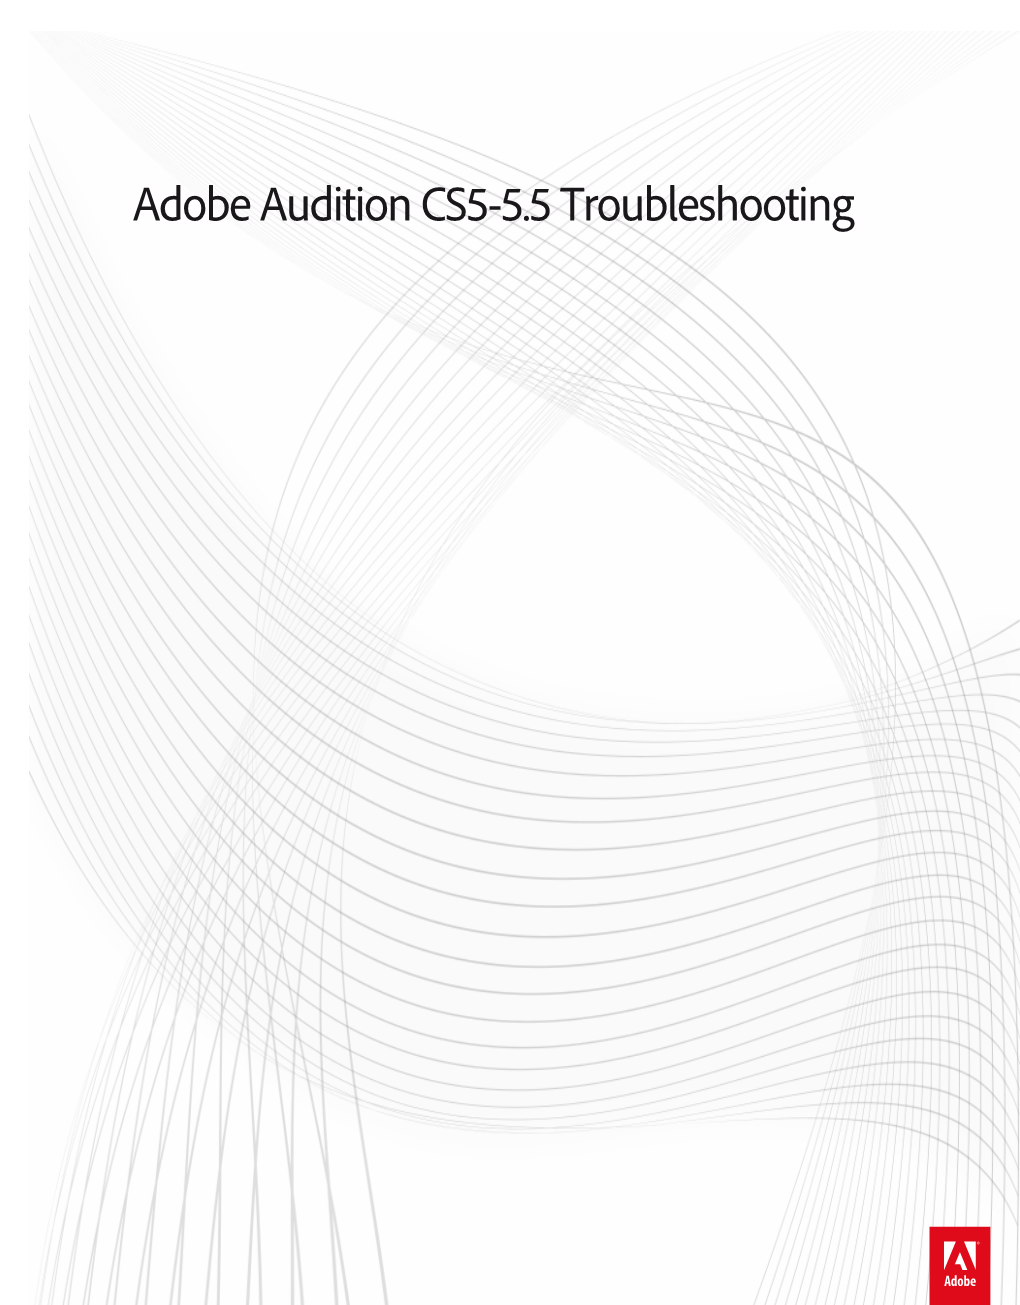 Adobe Audition CS5 & CS5.5 Troubleshooting